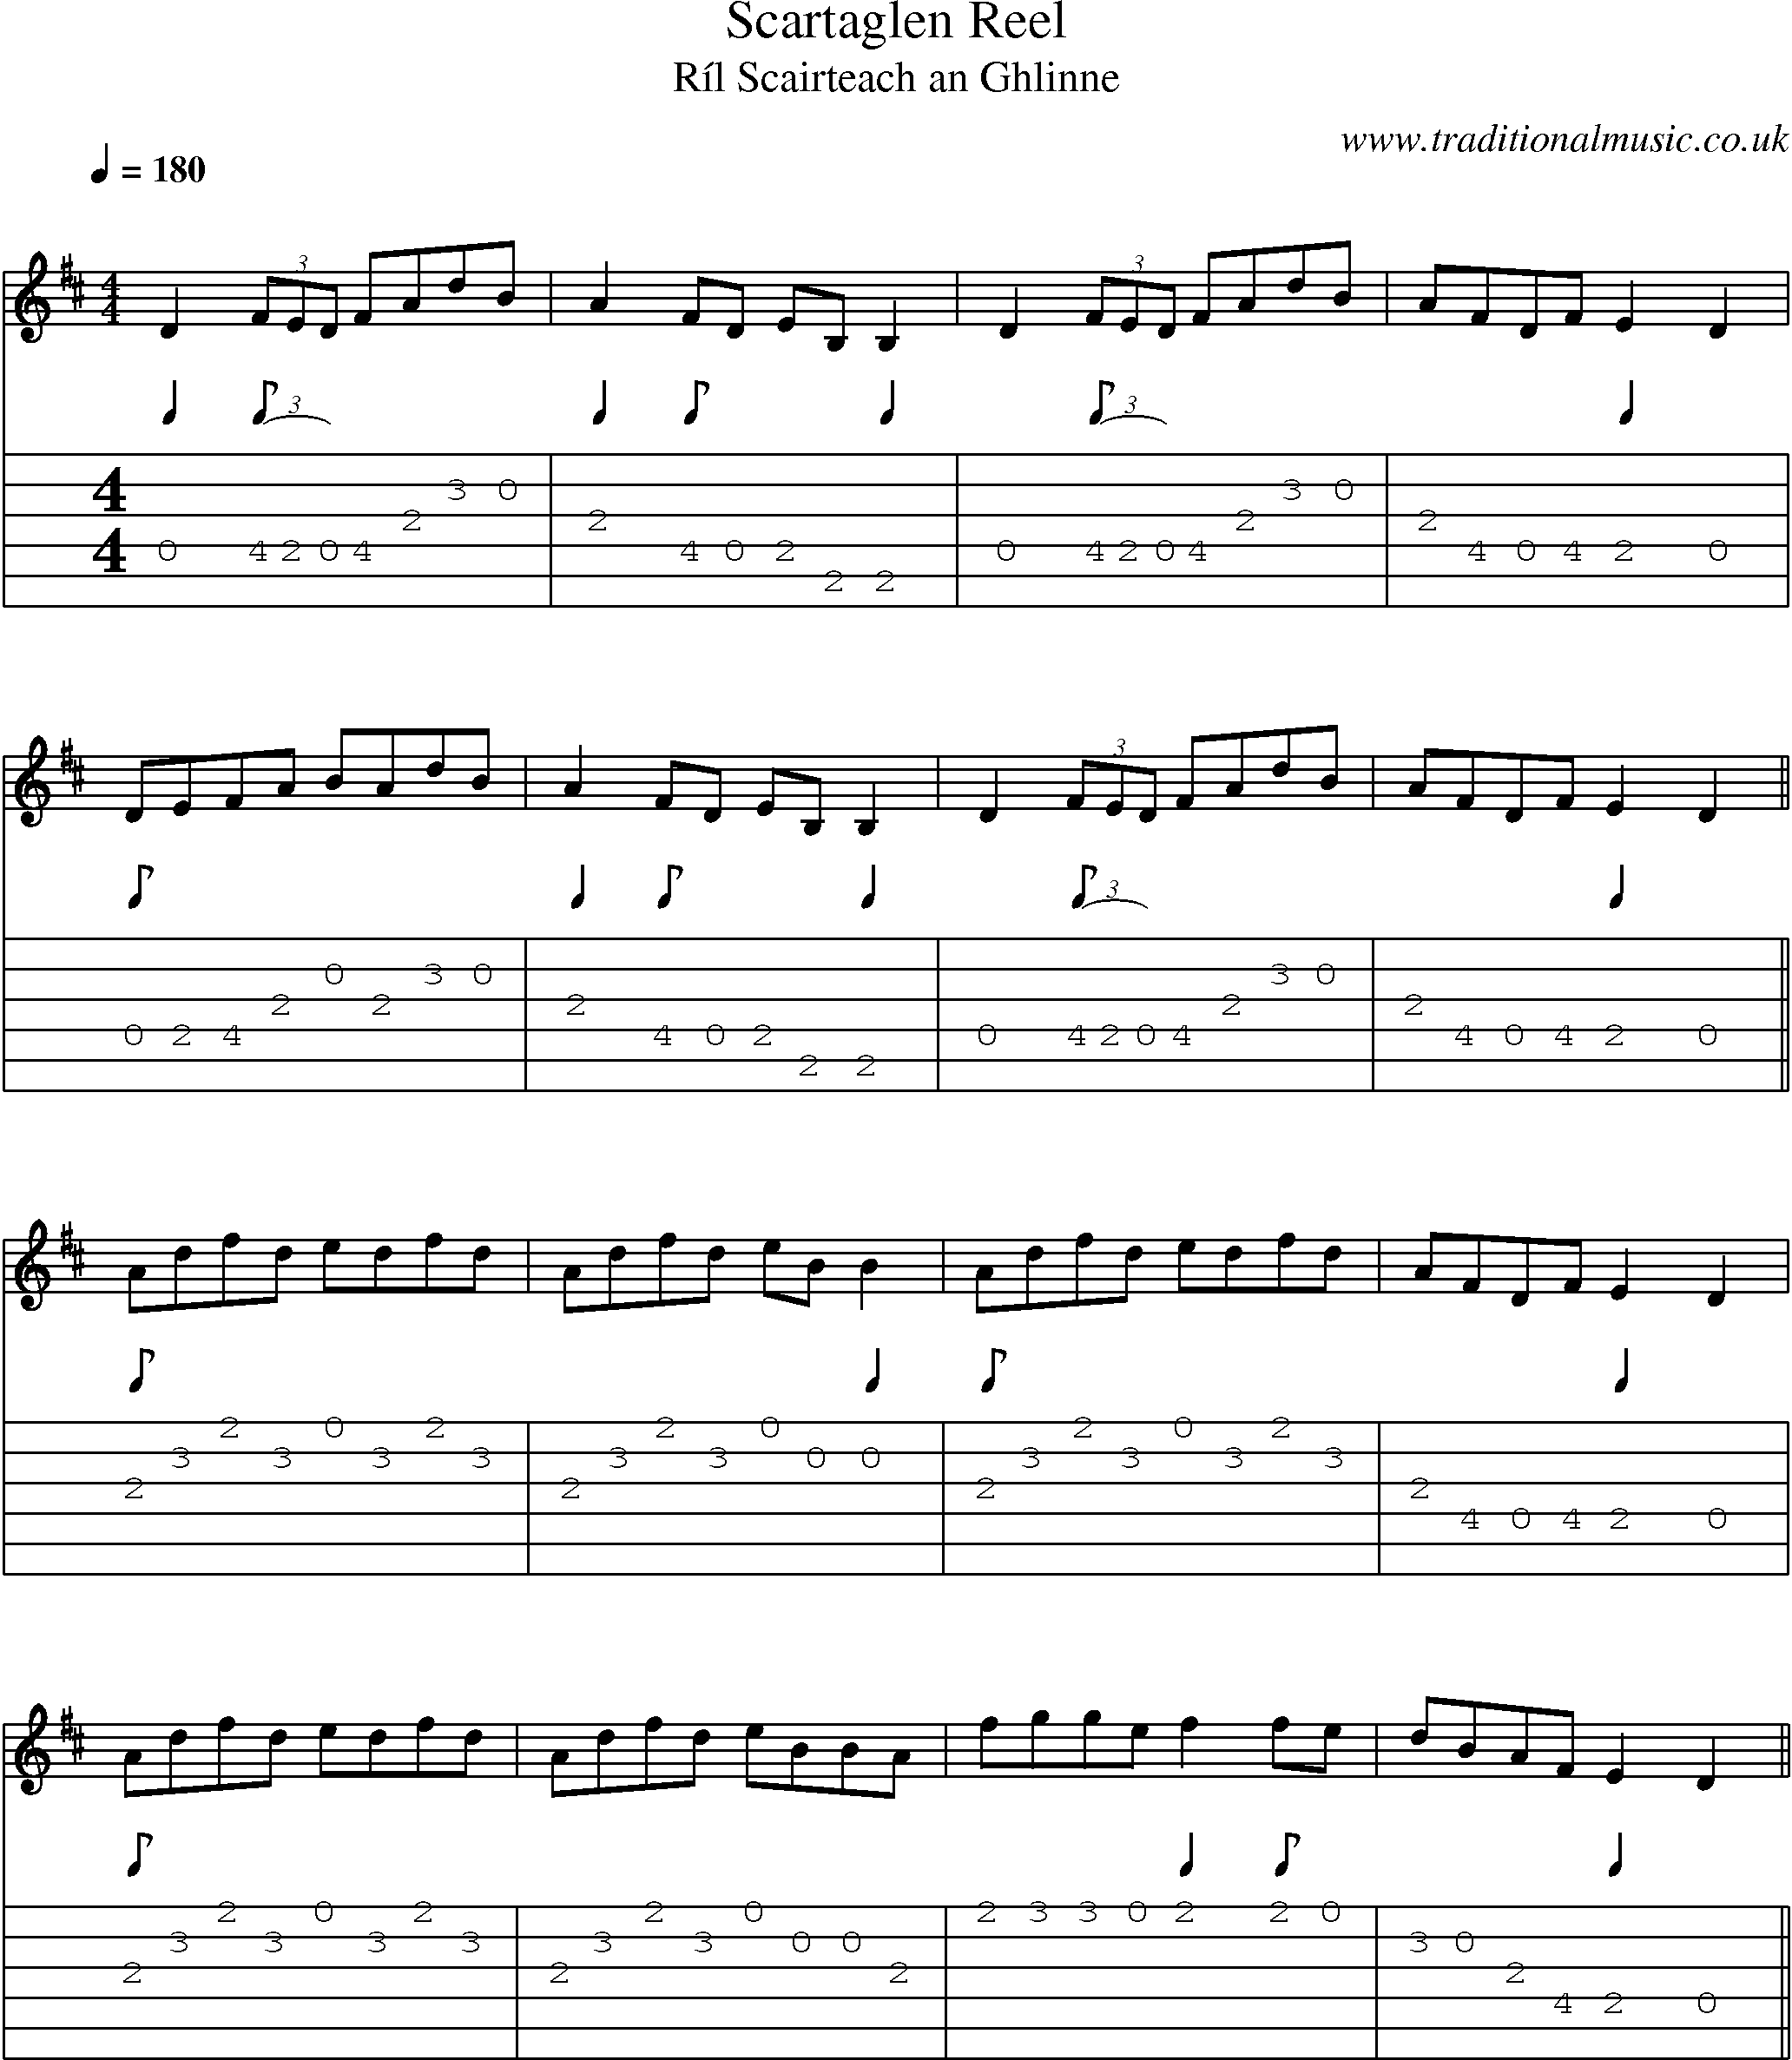 Music Score and Guitar Tabs for Scartaglen Reel